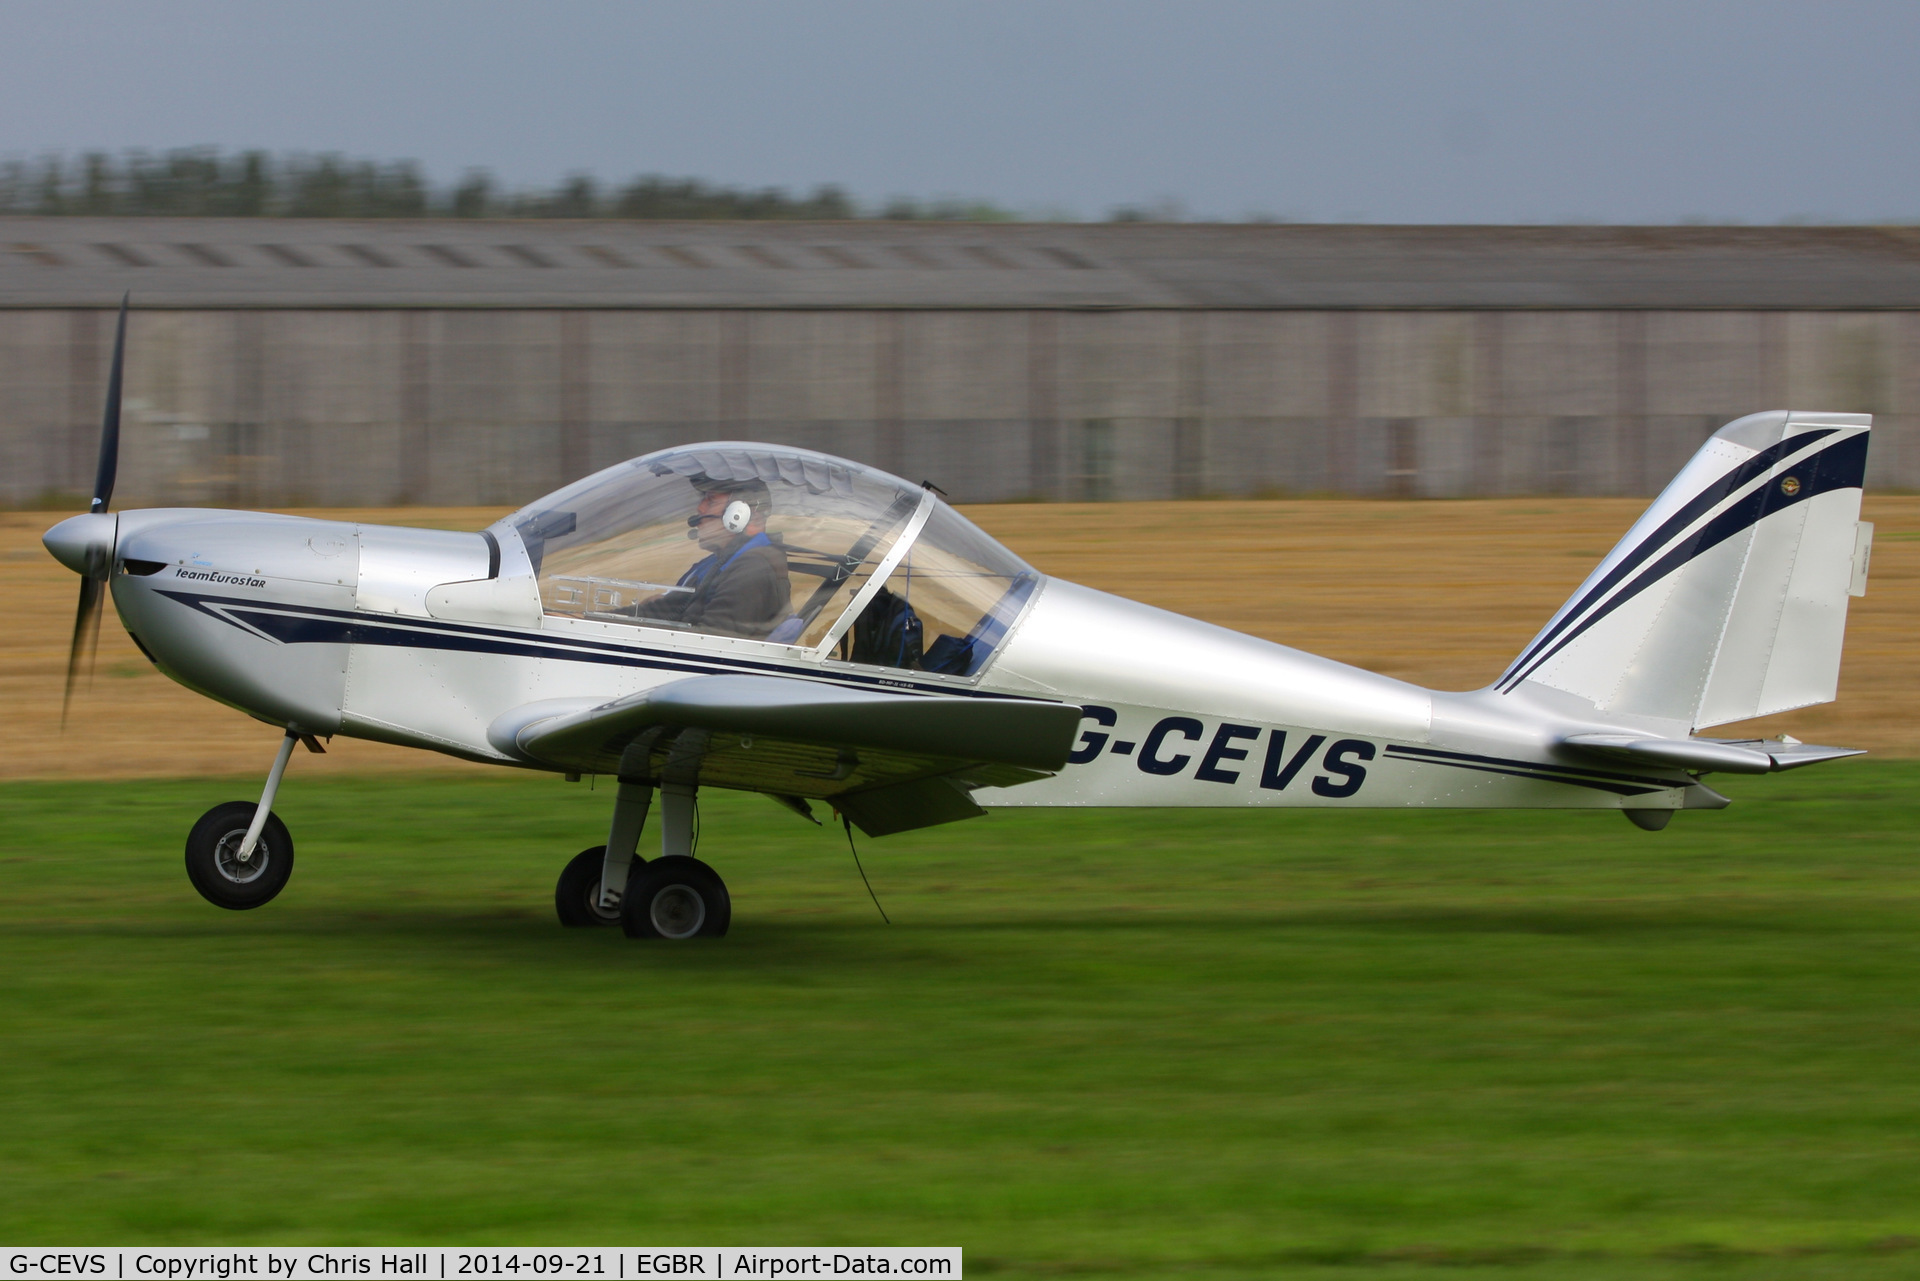 G-CEVS, 2007 Cosmik EV-97 TeamEurostar UK C/N 3102, at Breighton's Heli Fly-in, 2014